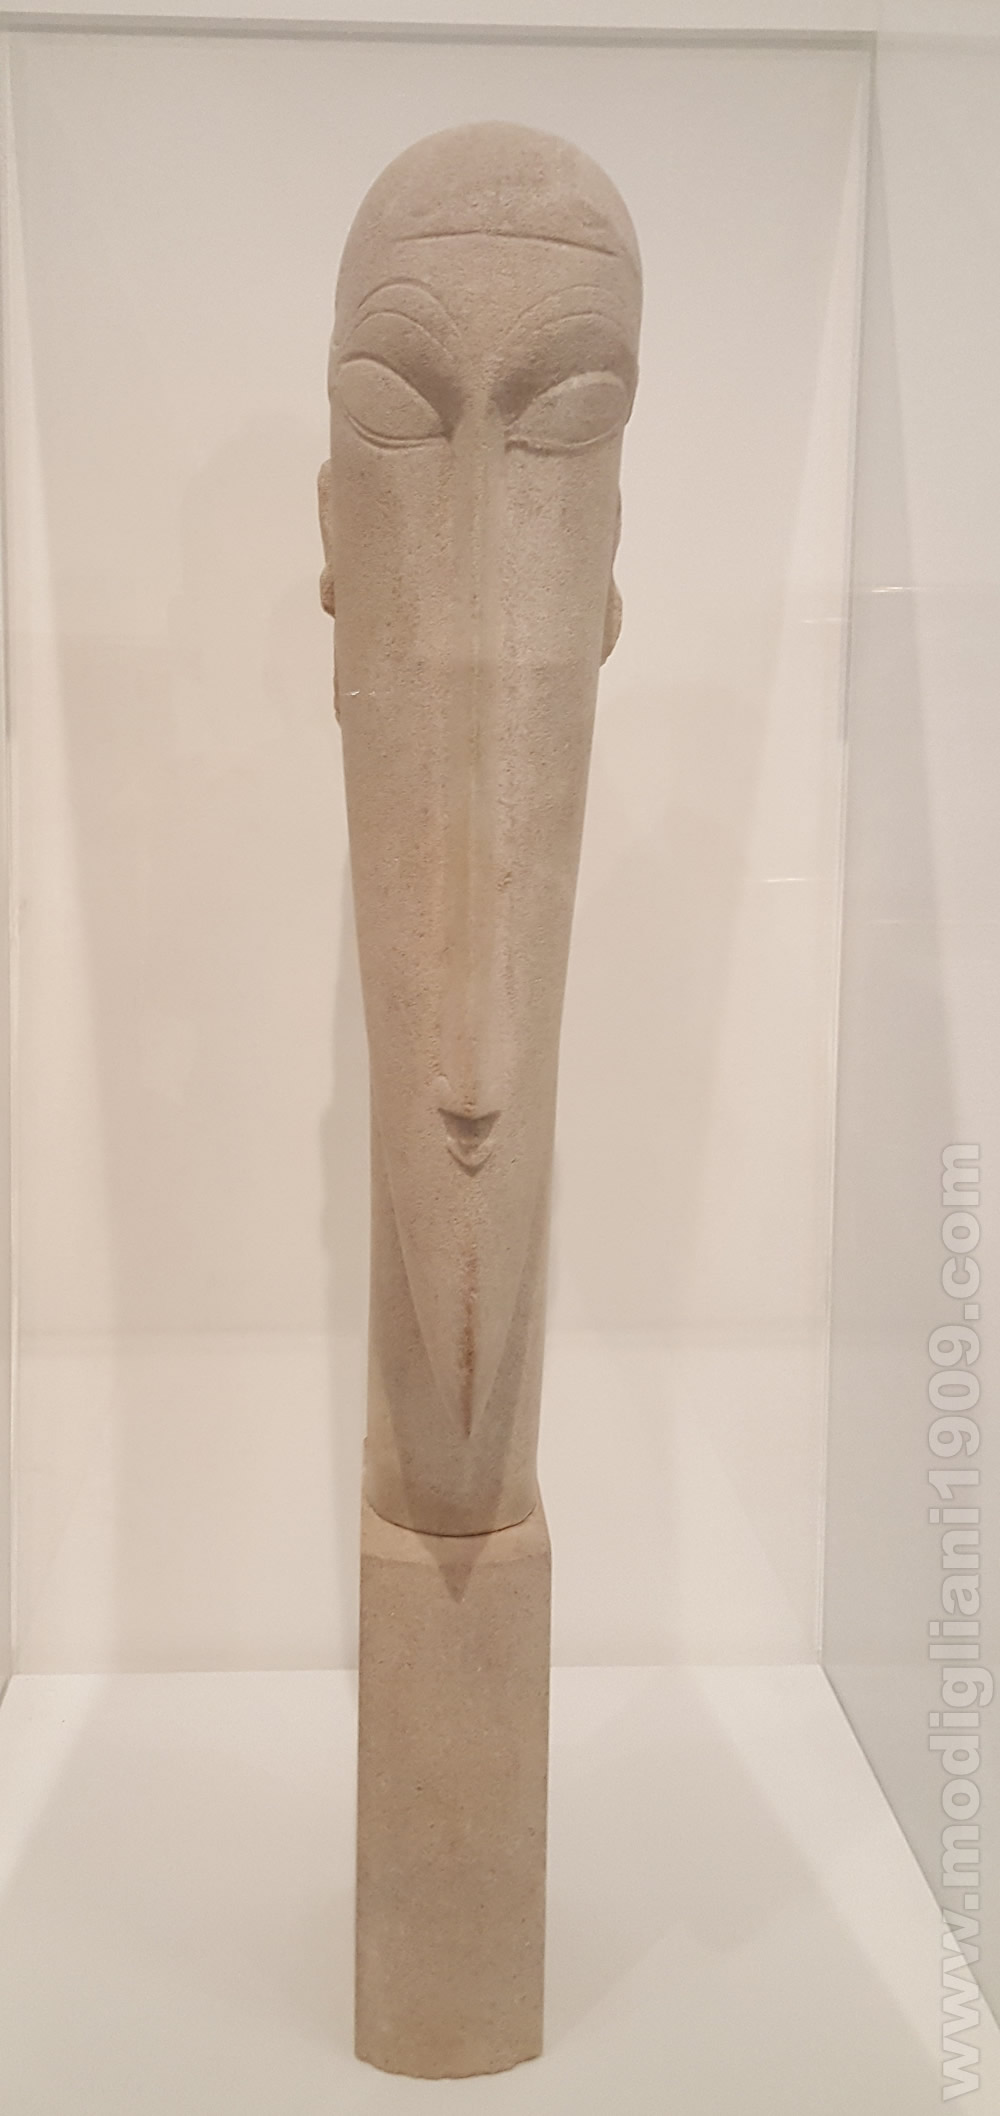 Голова, Амедео Модильяни, 1911 - 1912, Tate Modern, London